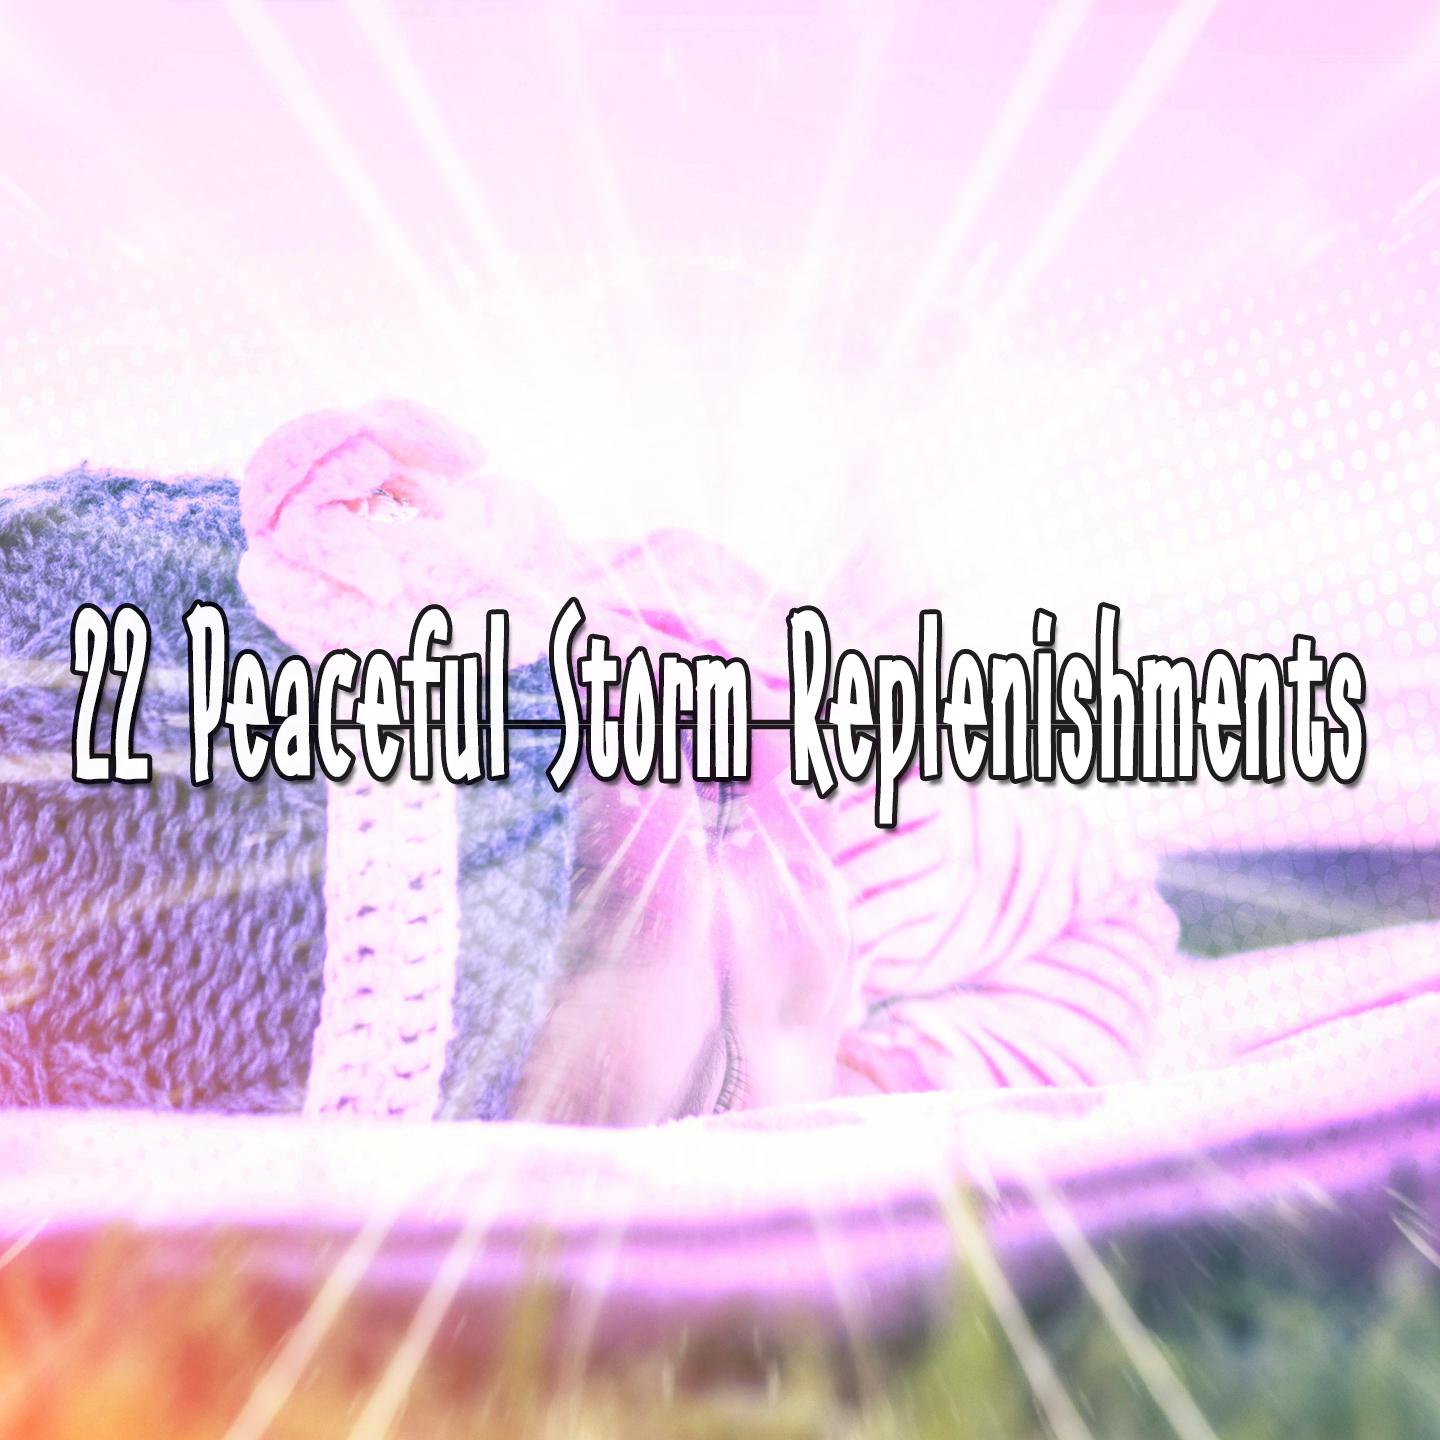 22 Peaceful Storm Replenishments